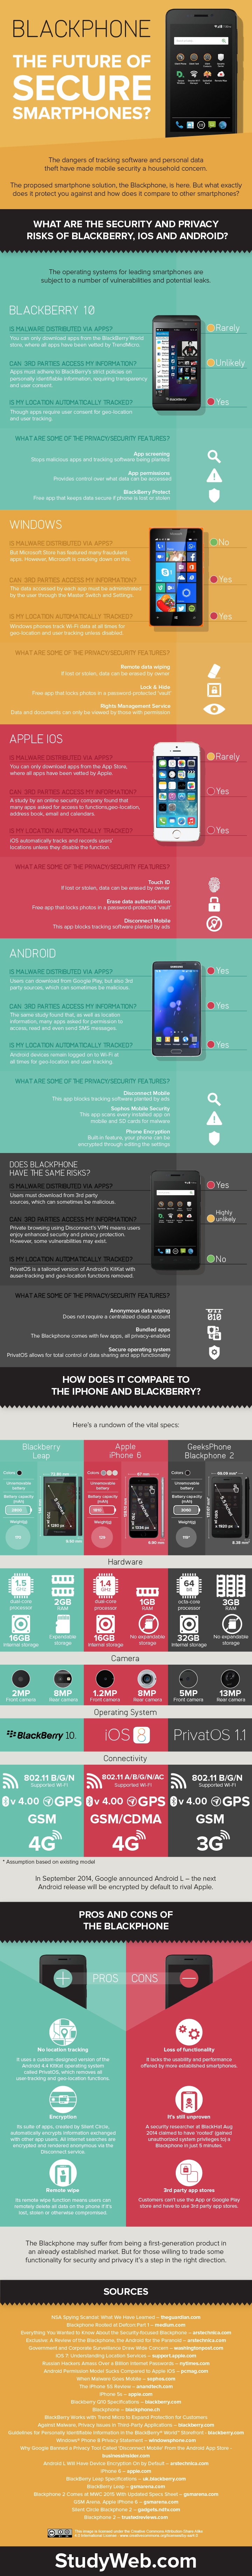 Blackphone-the-future-of-secure-smartphones